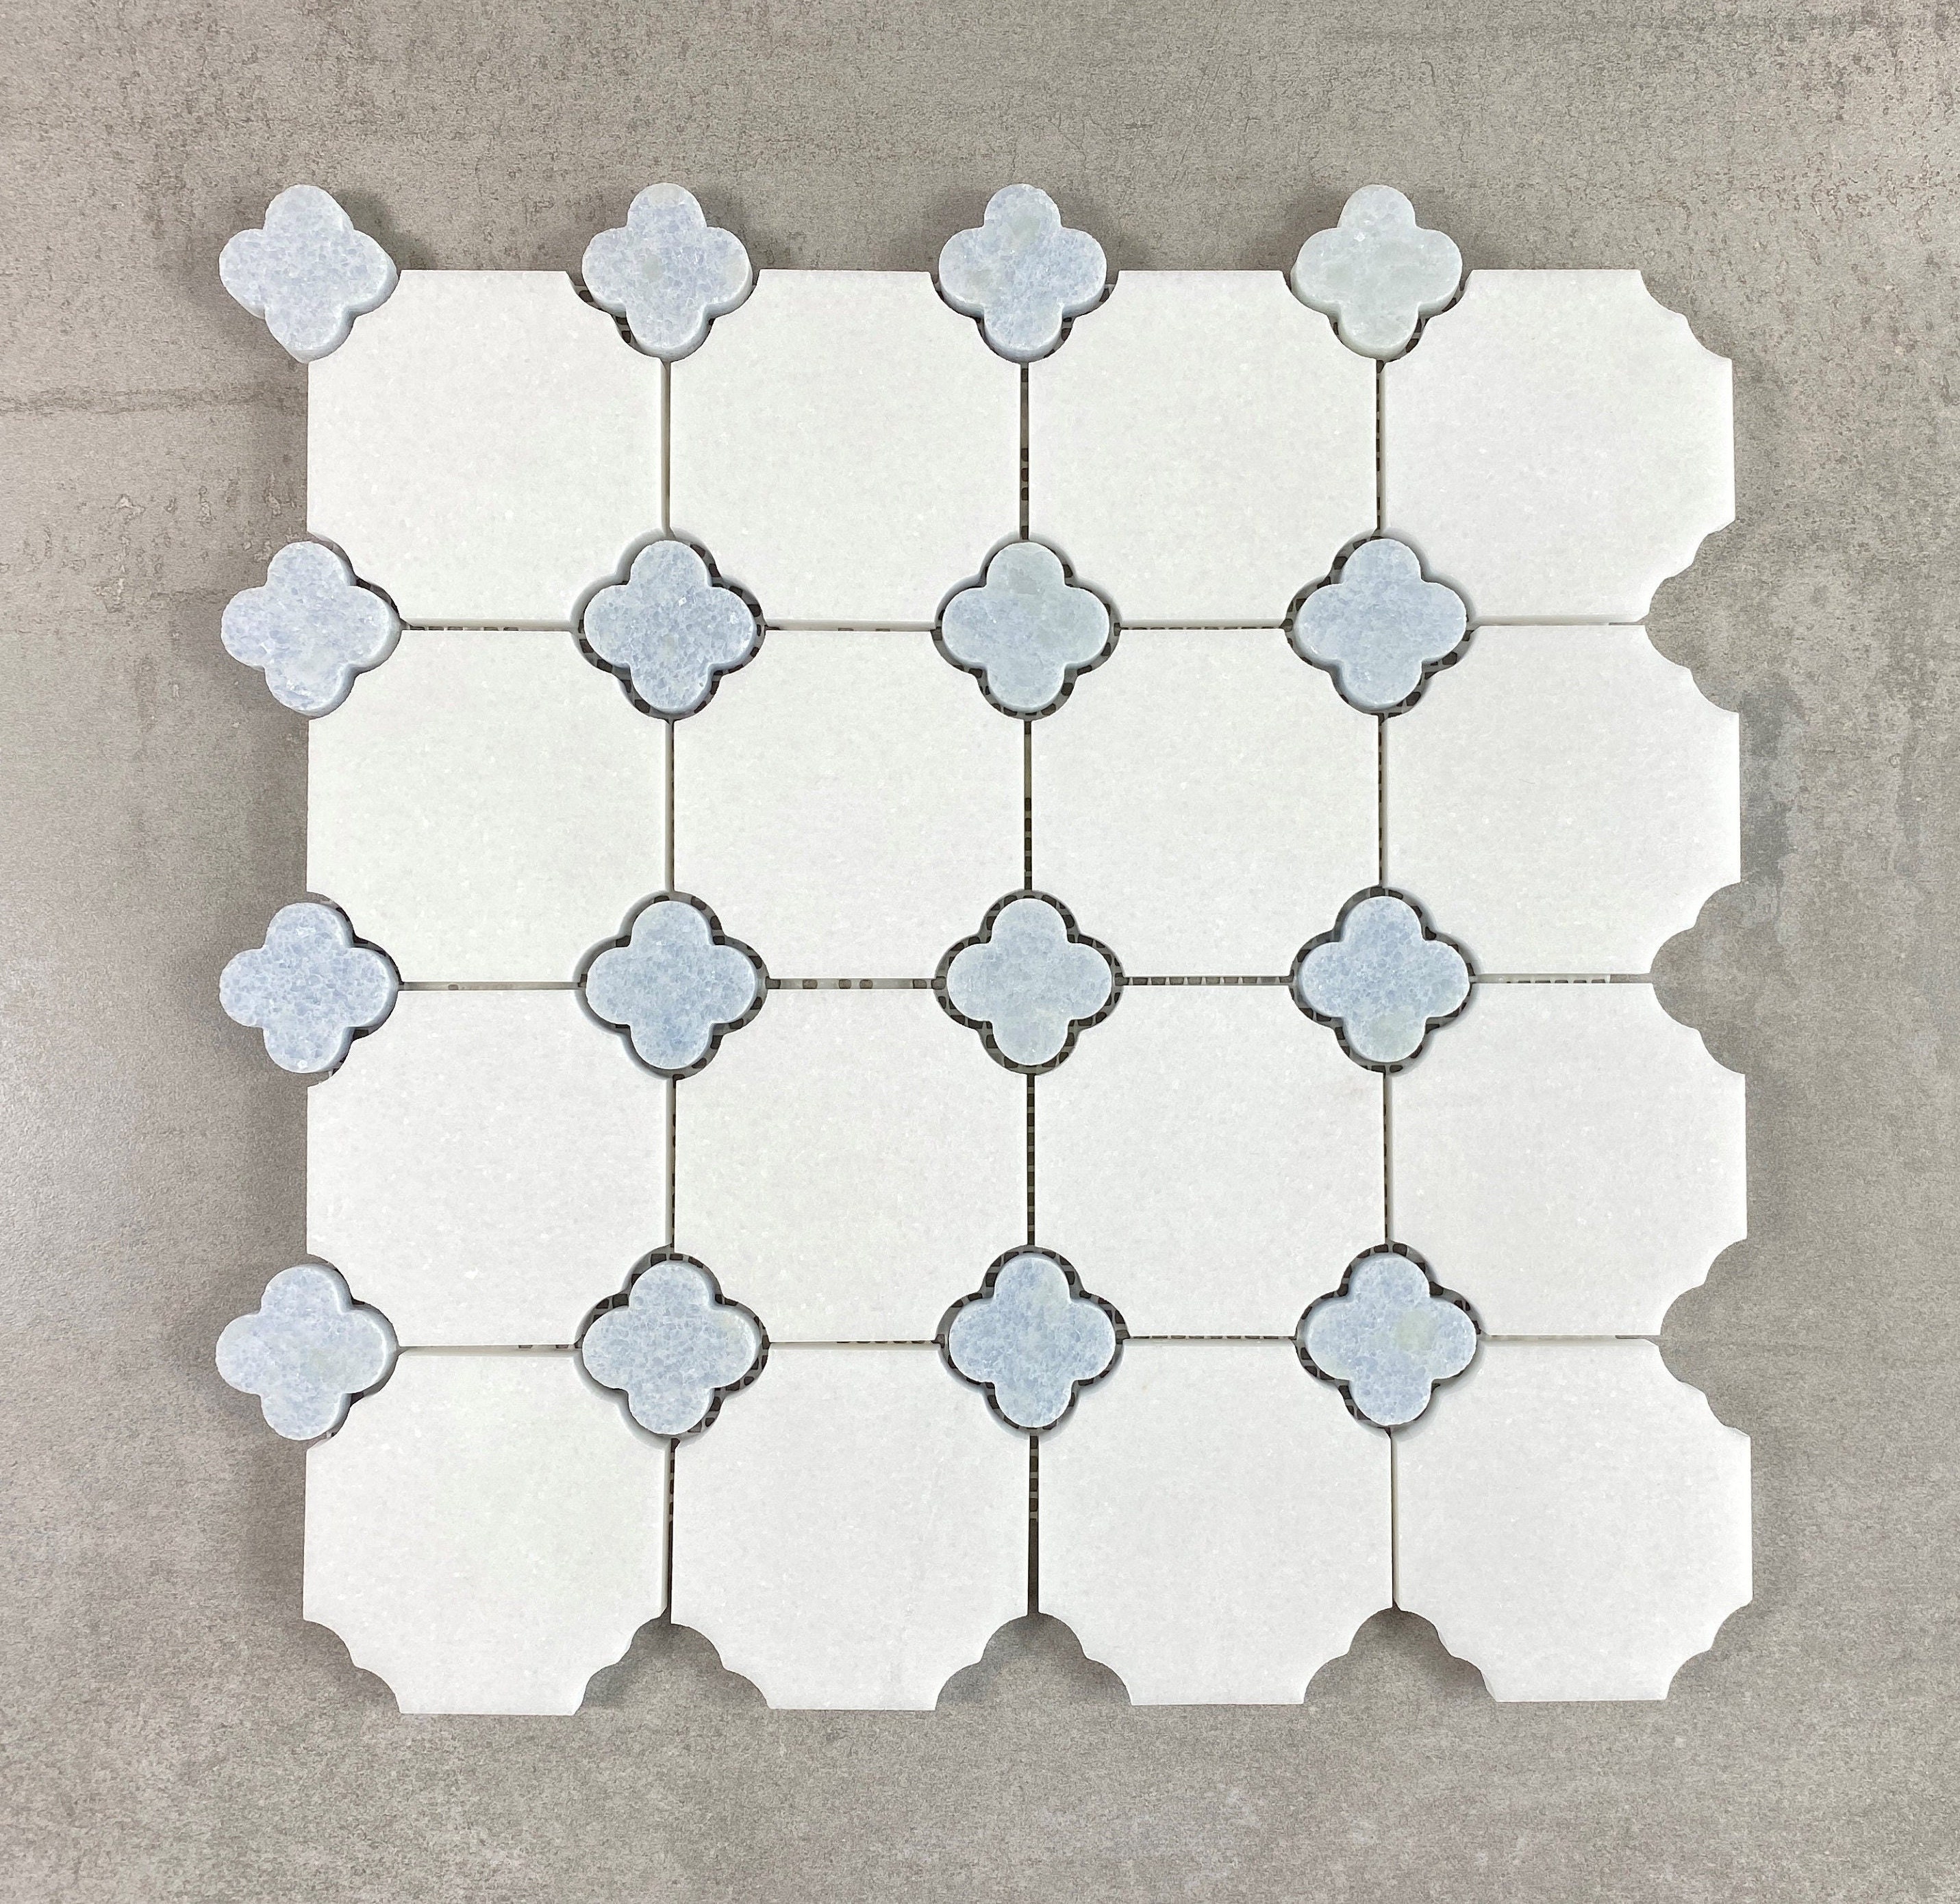 Smart Tiles Milano Massa Carrara White Marble Peel and Stick Backsplash  SM1119